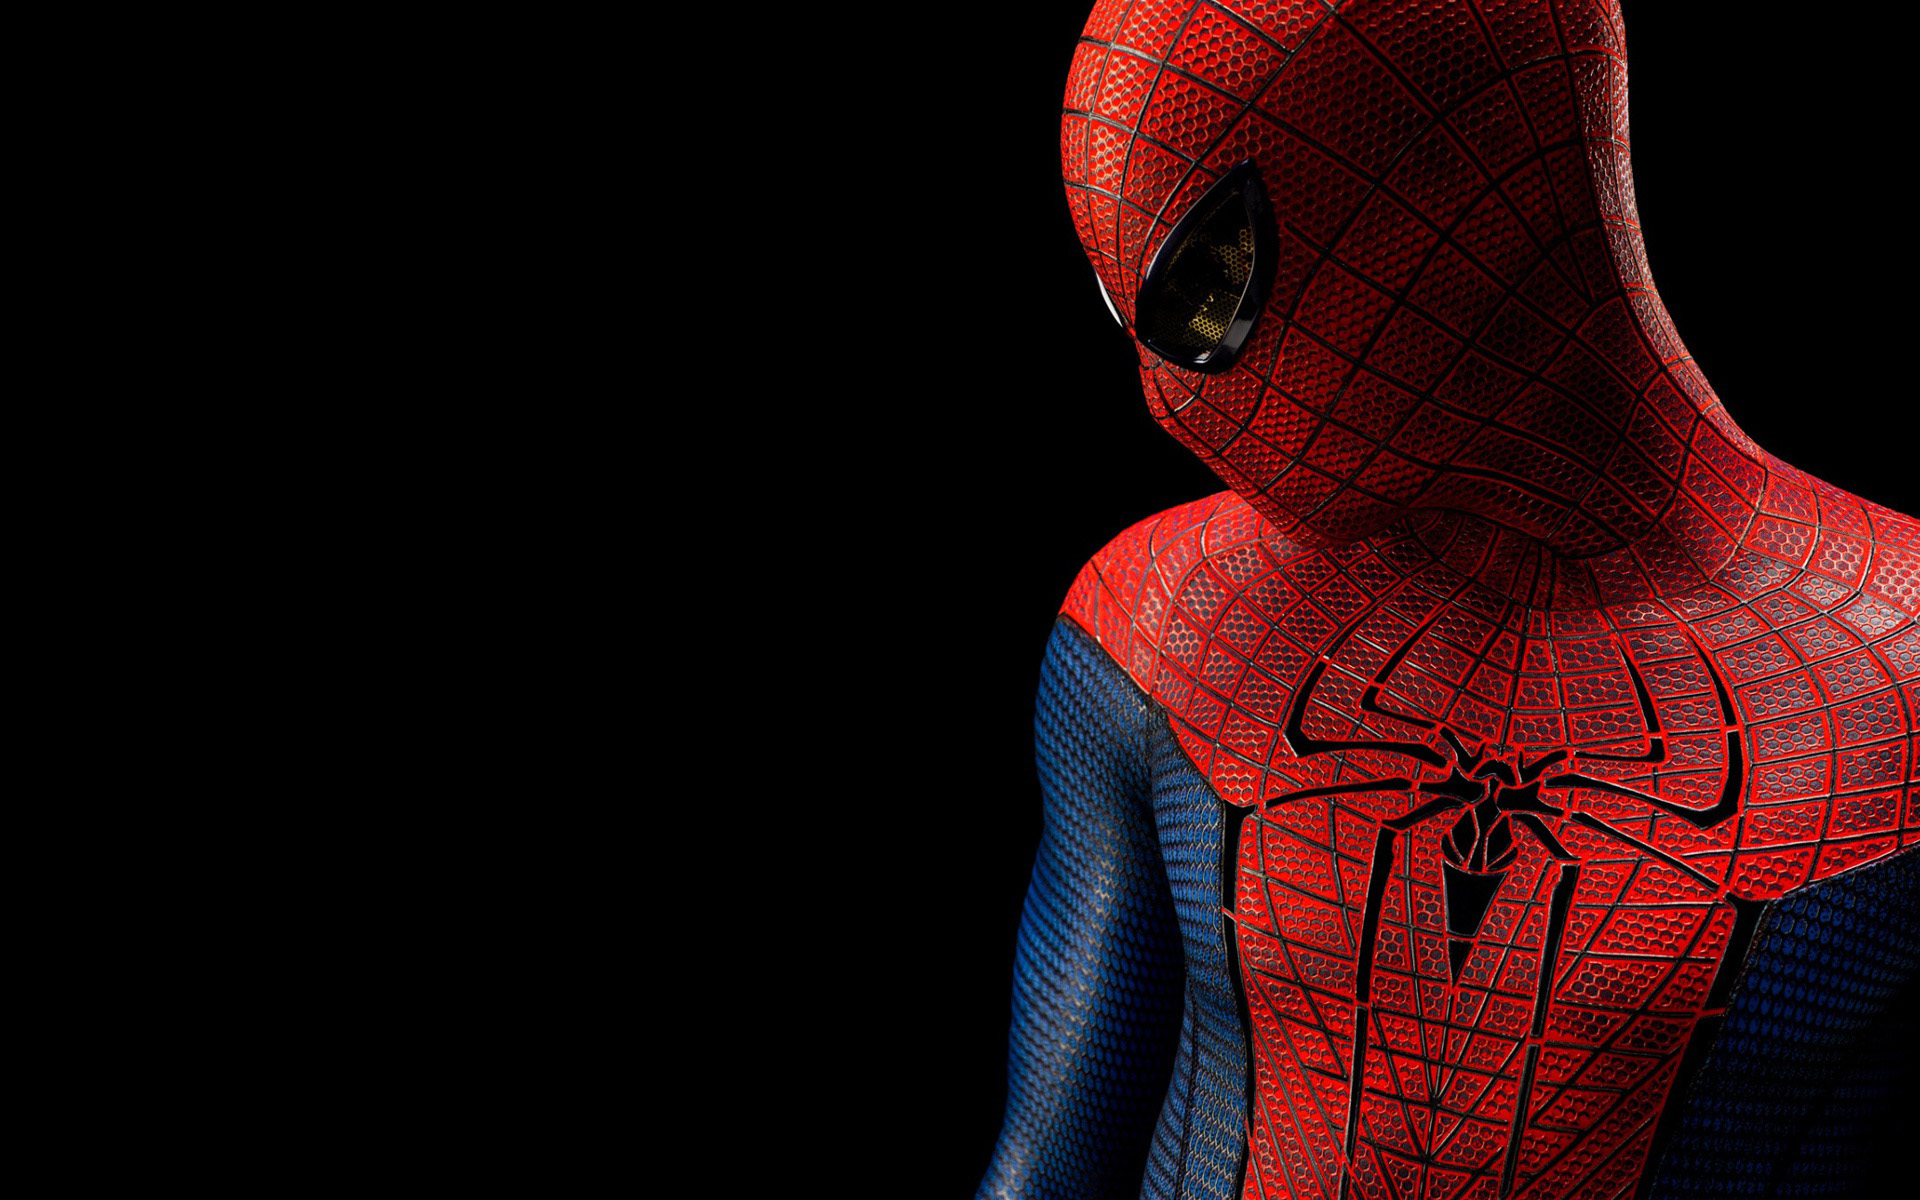 Spider Man Wallpaper HDthe Amazing